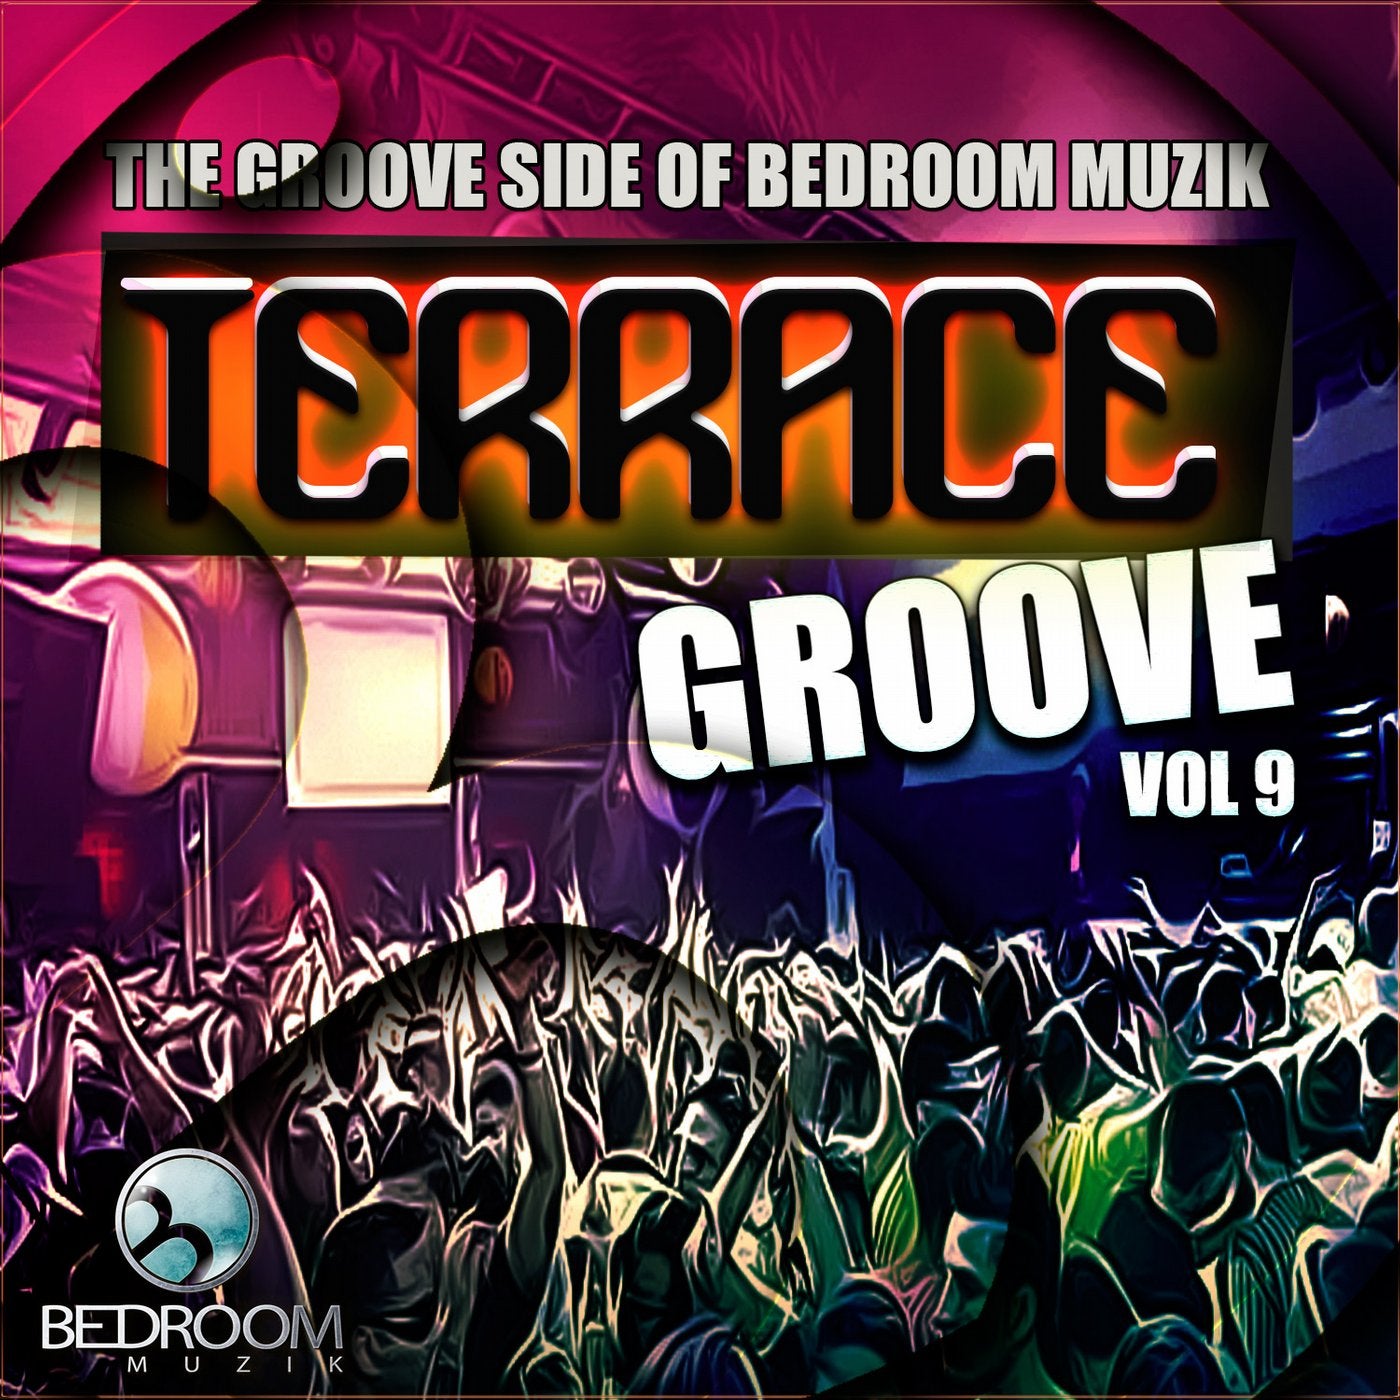 Terrace Groove Vol 9